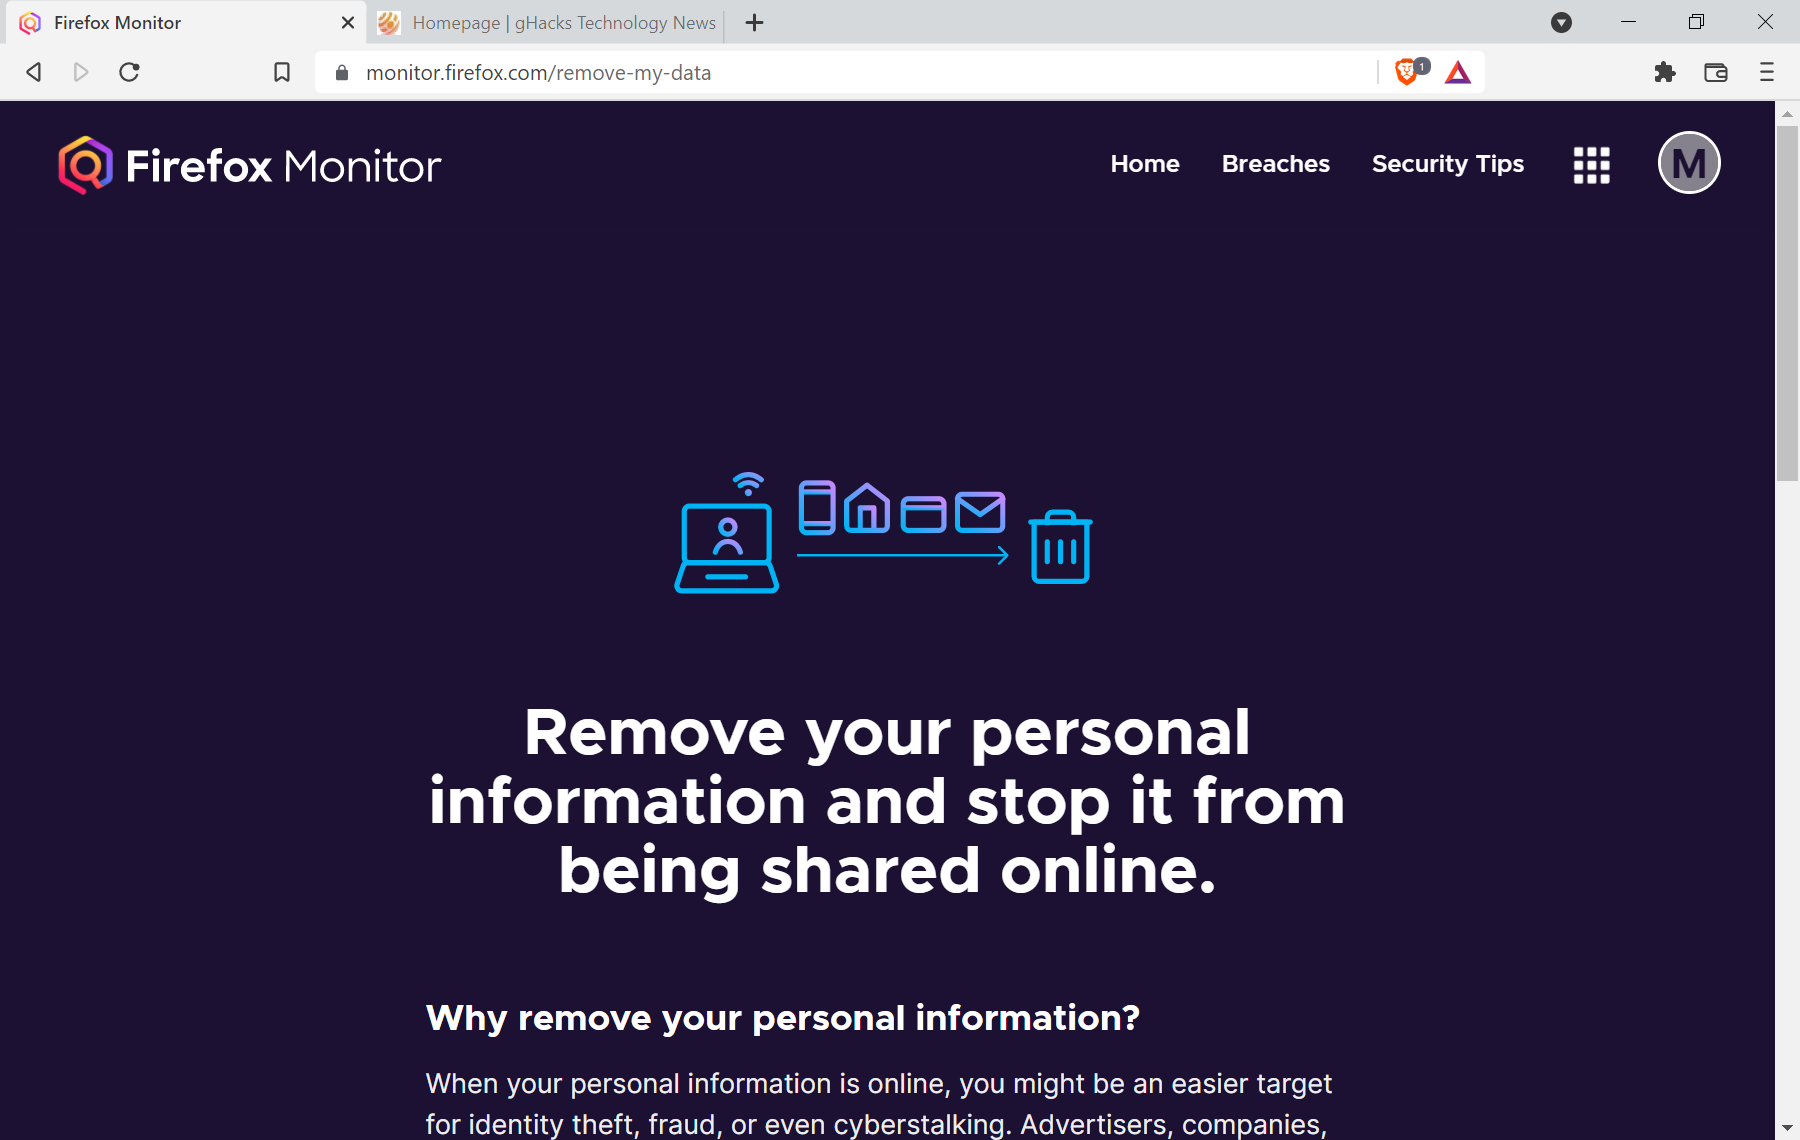 Firefox monitors personal information